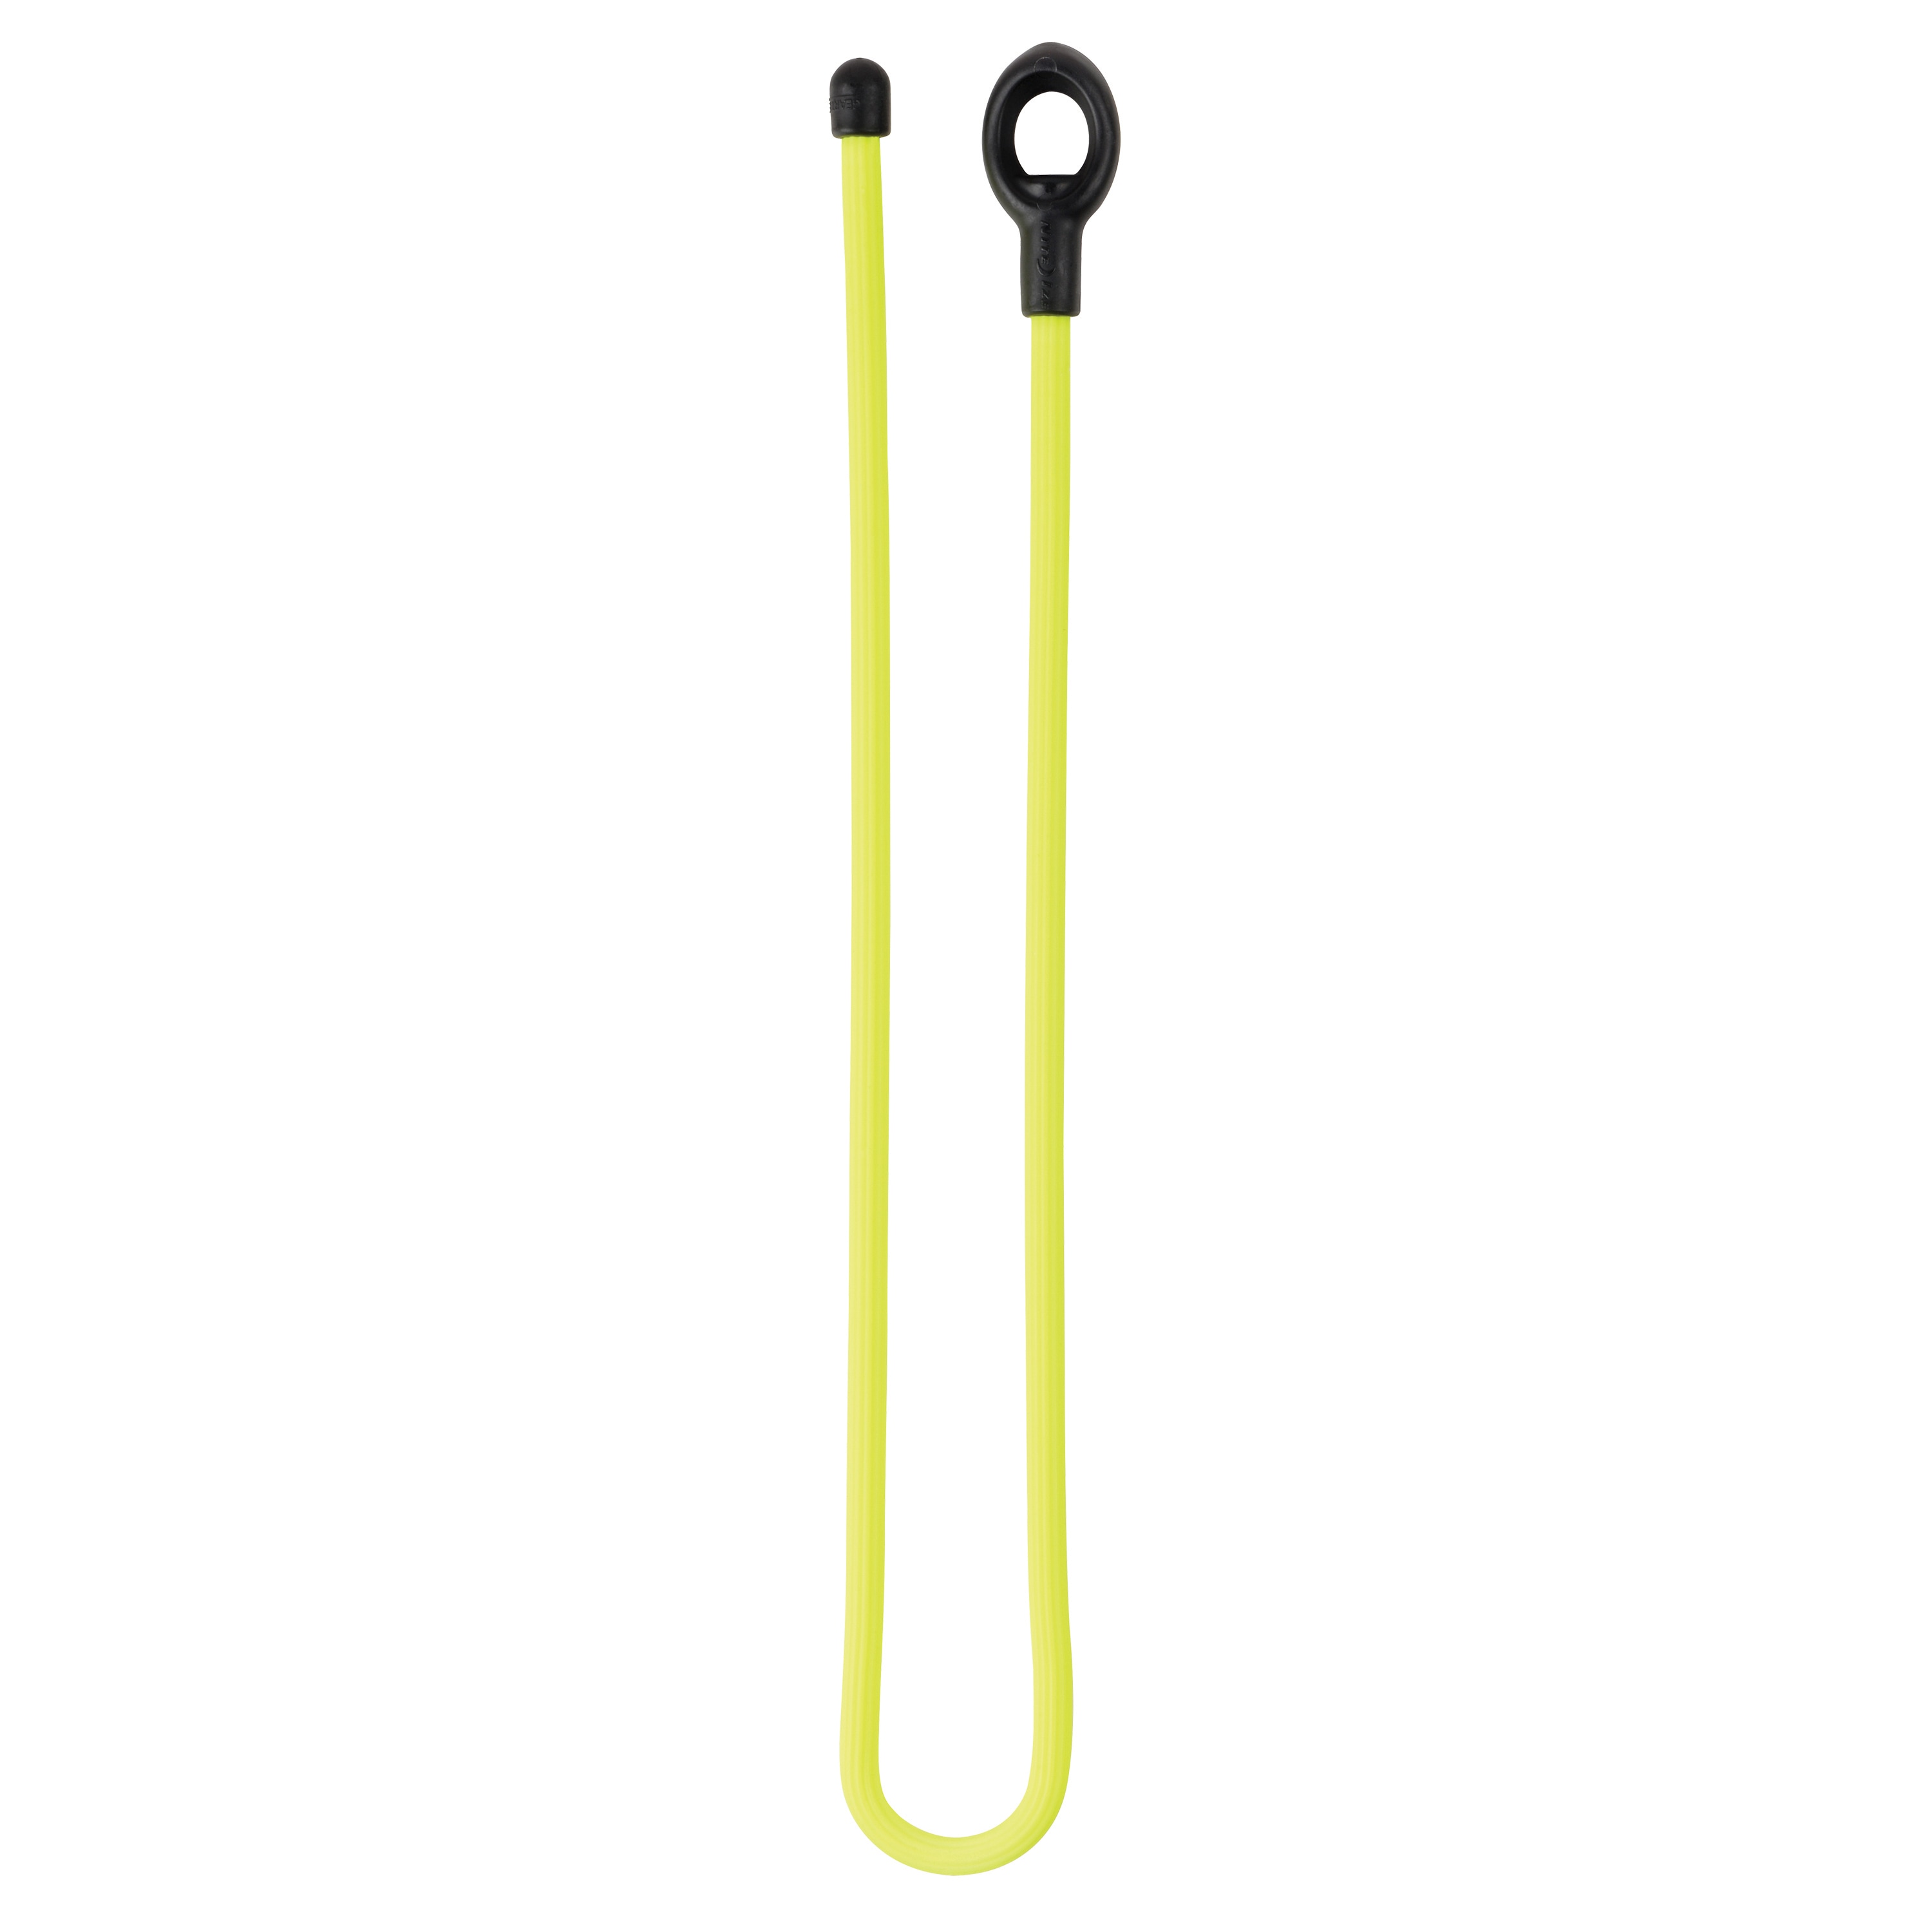 Nite Ize Gear Tie Loopable Twist Tie 12-2 Pack Neon Yellow 